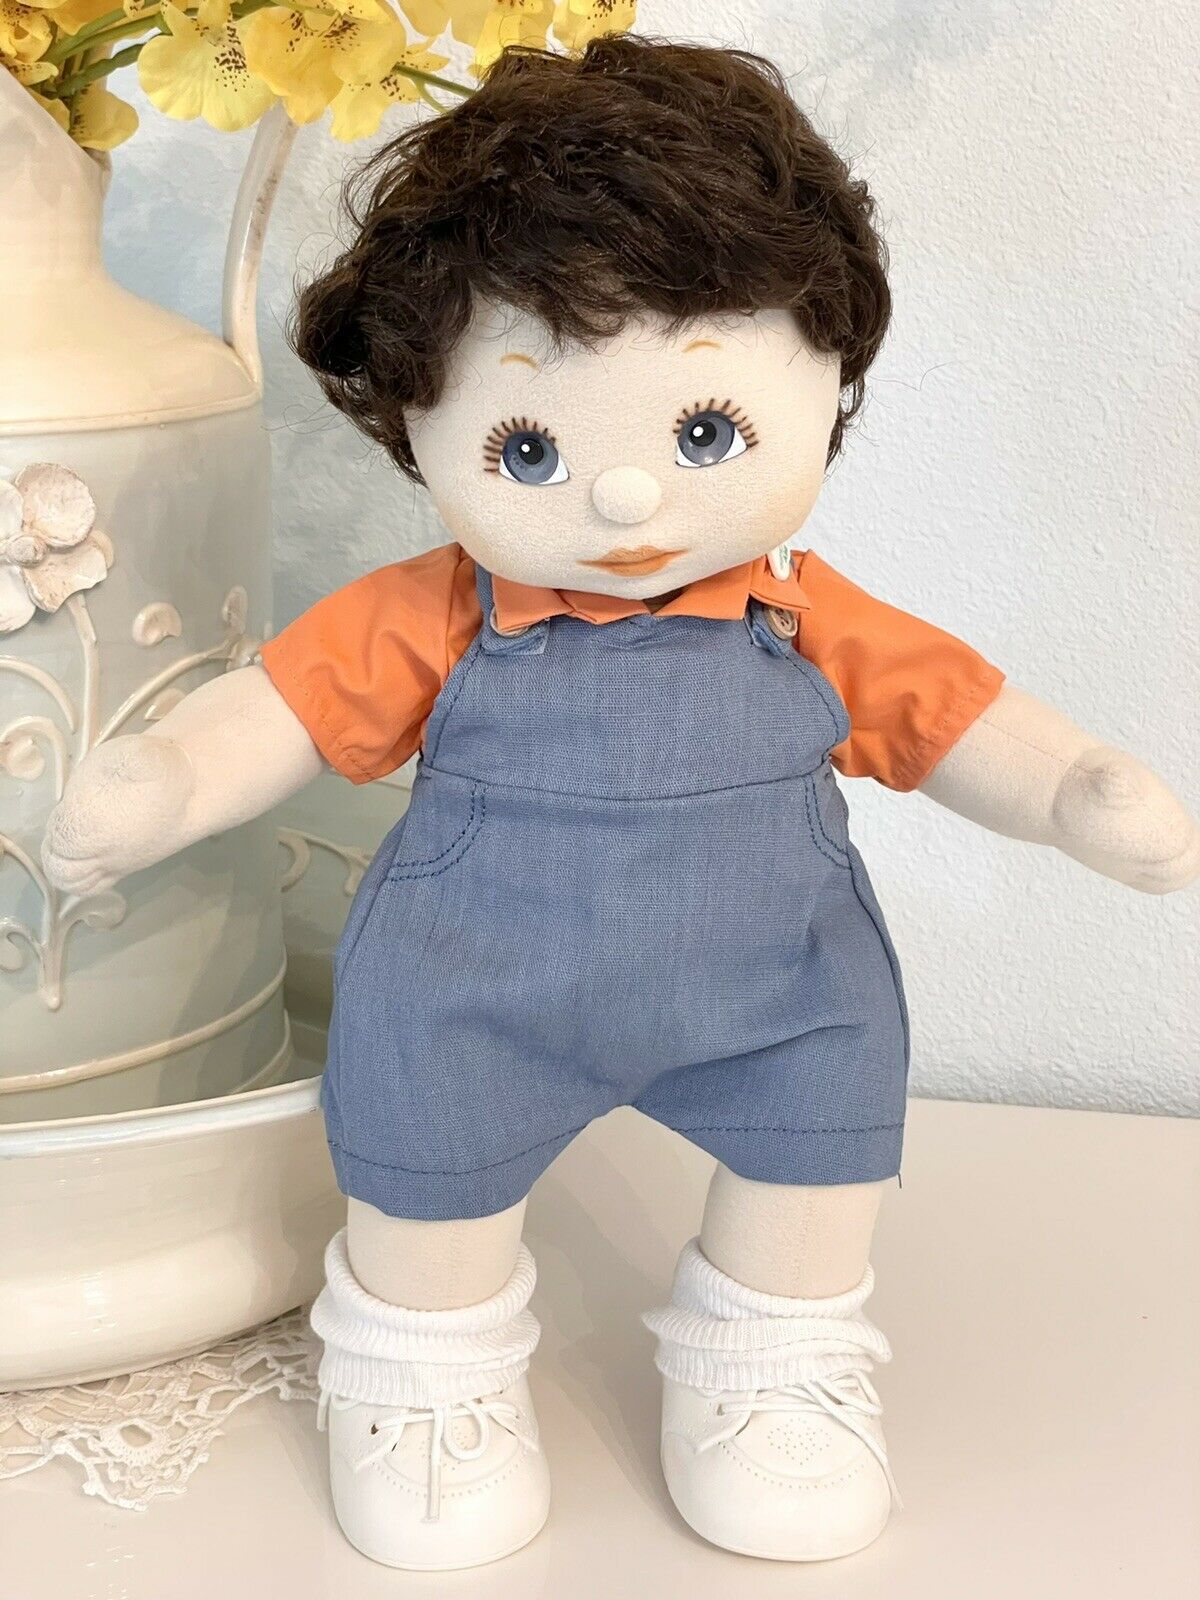 1986 Mattel My Child Doll Blue-eyed Brunette Boy Restored & Dressed